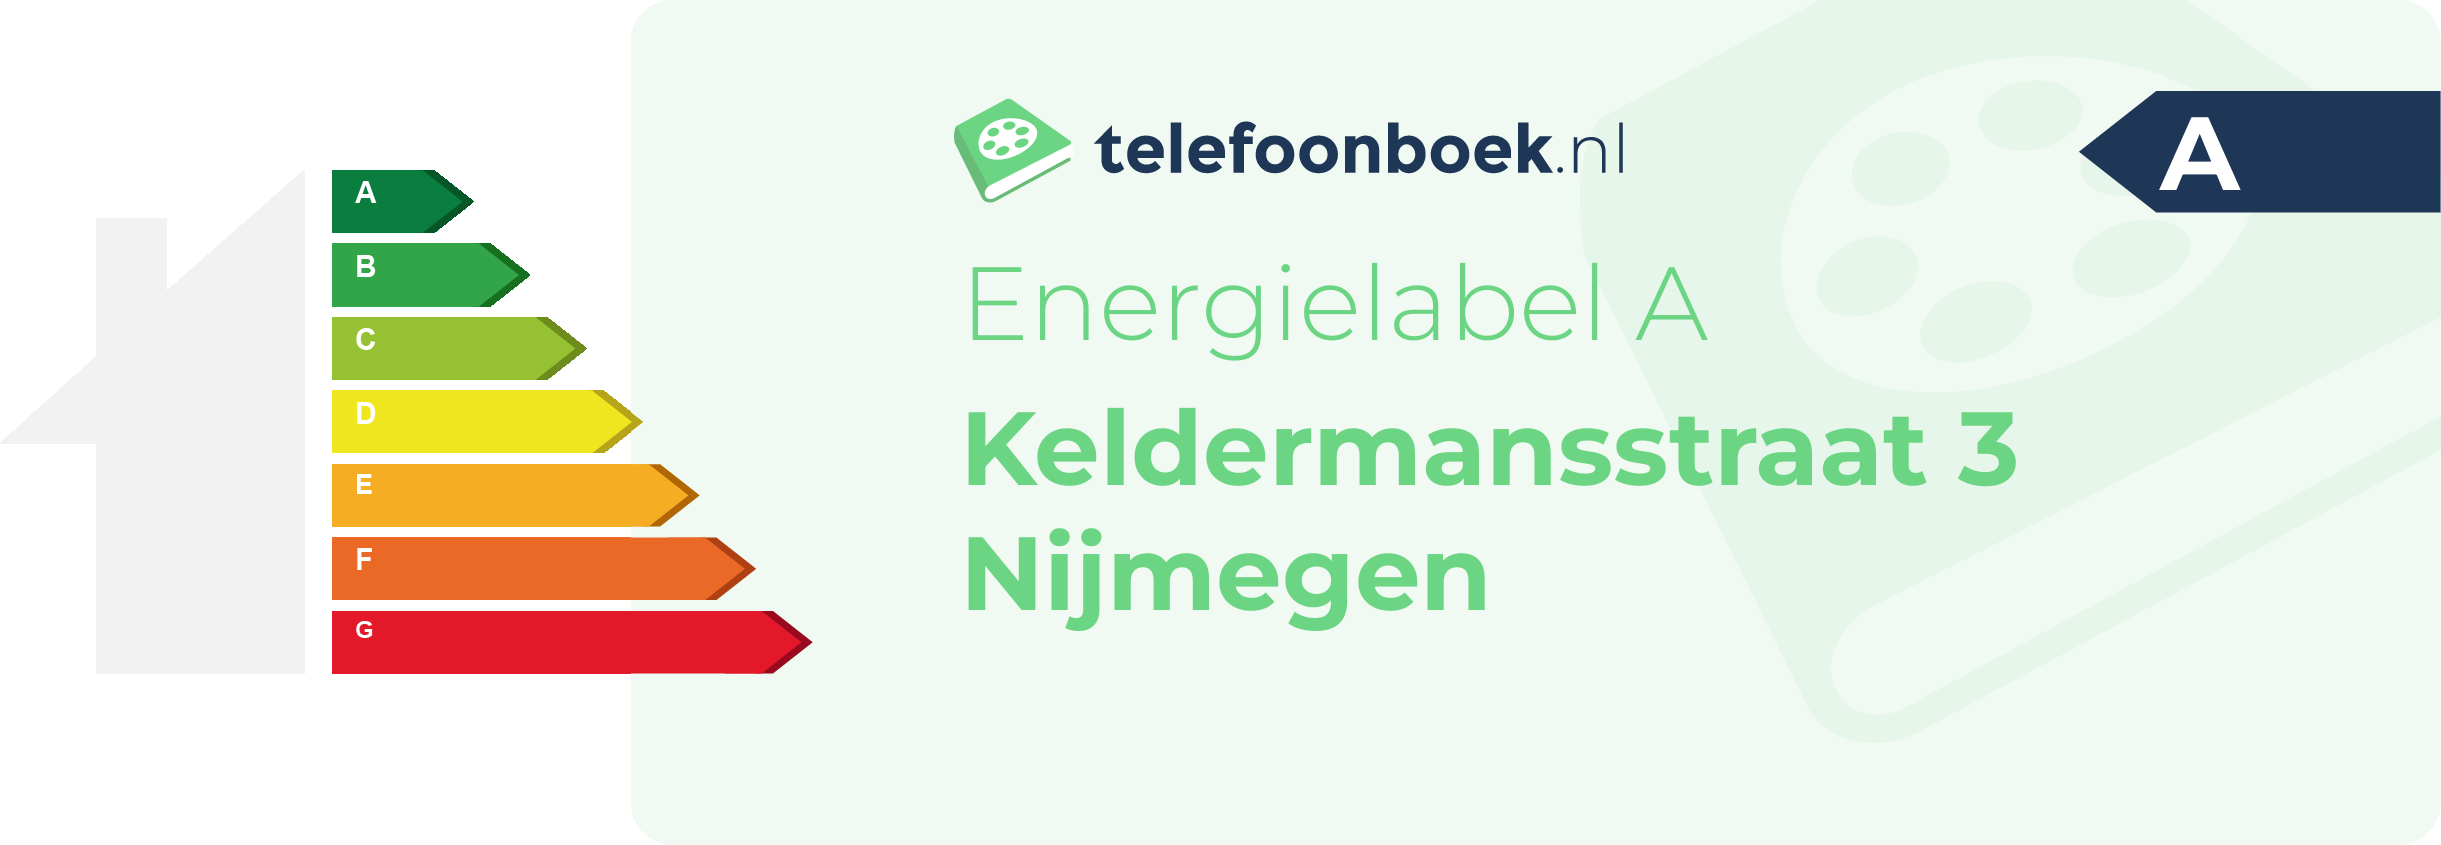 Energielabel Keldermansstraat 3 Nijmegen